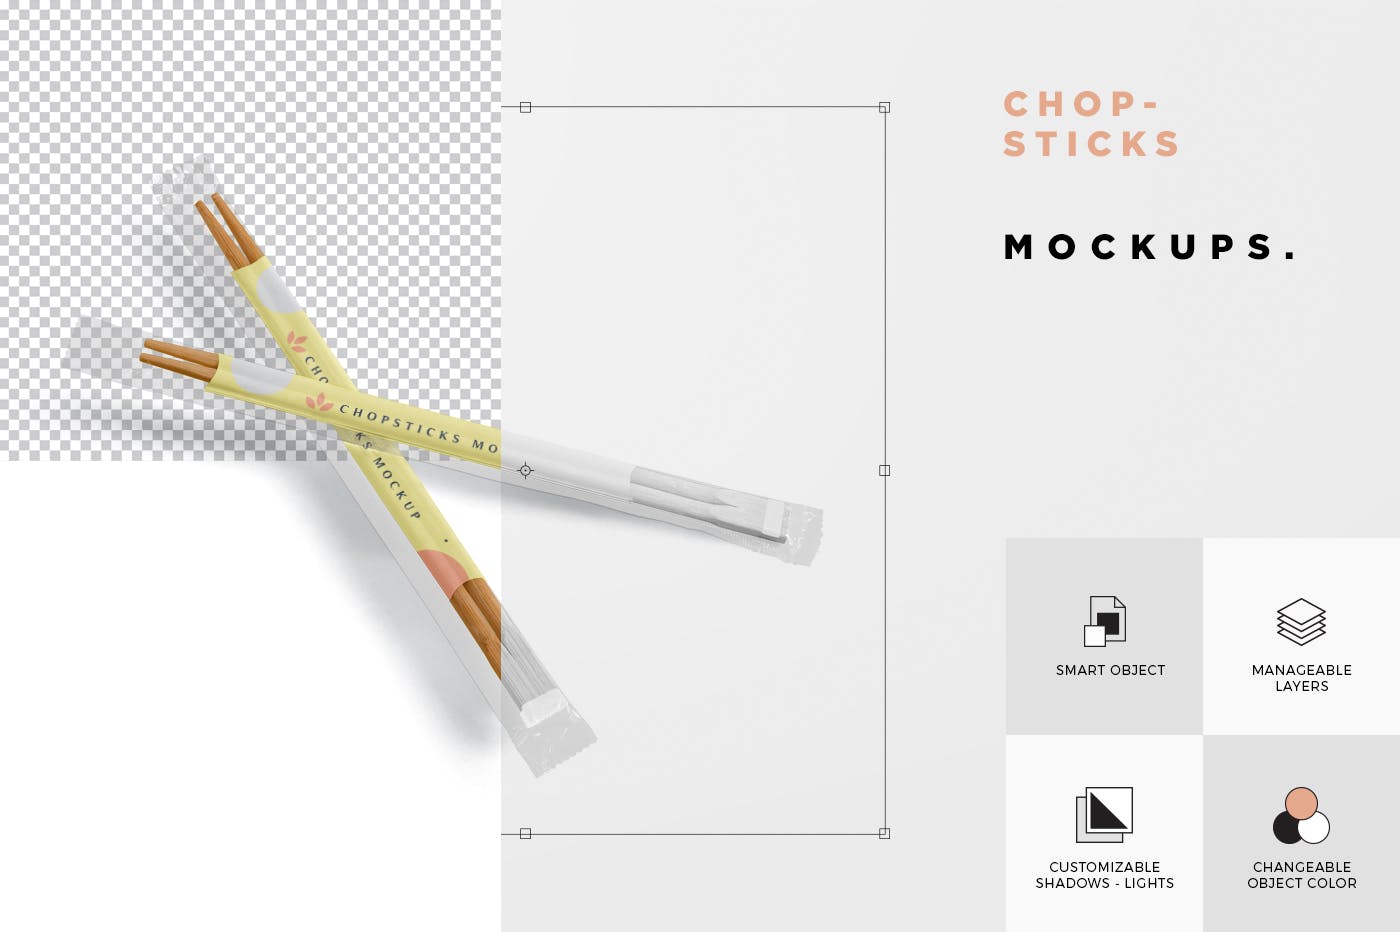 筷子透明包装设计效果图样机 Chopsticks Mockup in Transparent Packaging插图(5)